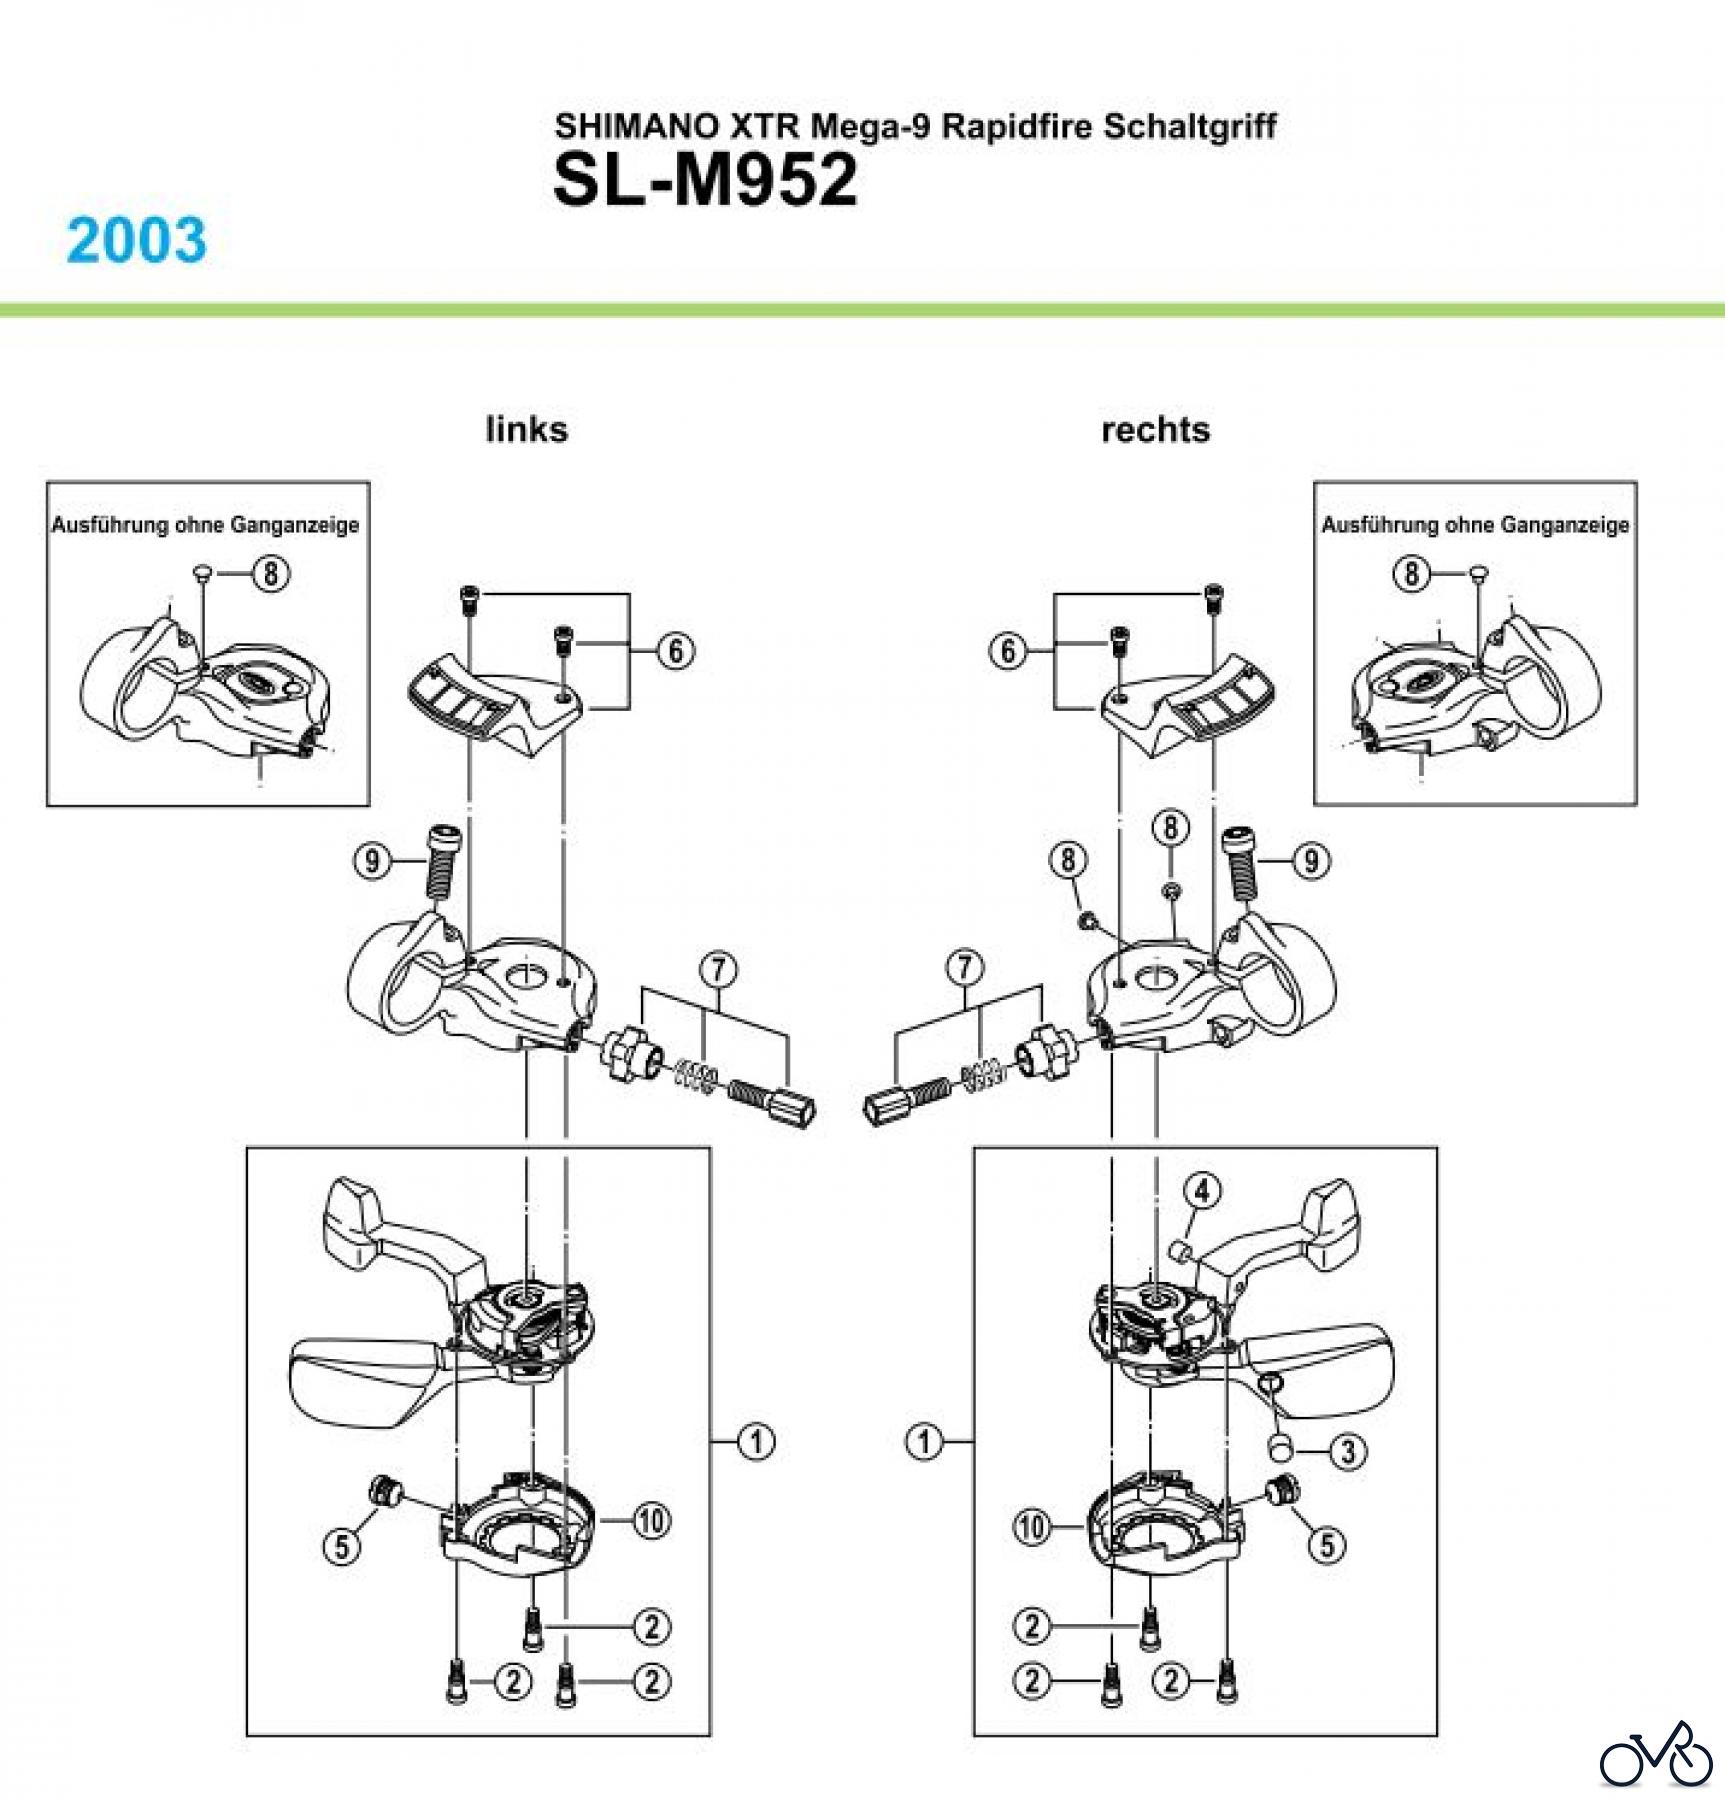  Shimano SL Shift Lever - Schalthebel SL-M952, 2003 SHIMANO XTR Mega-9 Rapidfire Schaltgriff